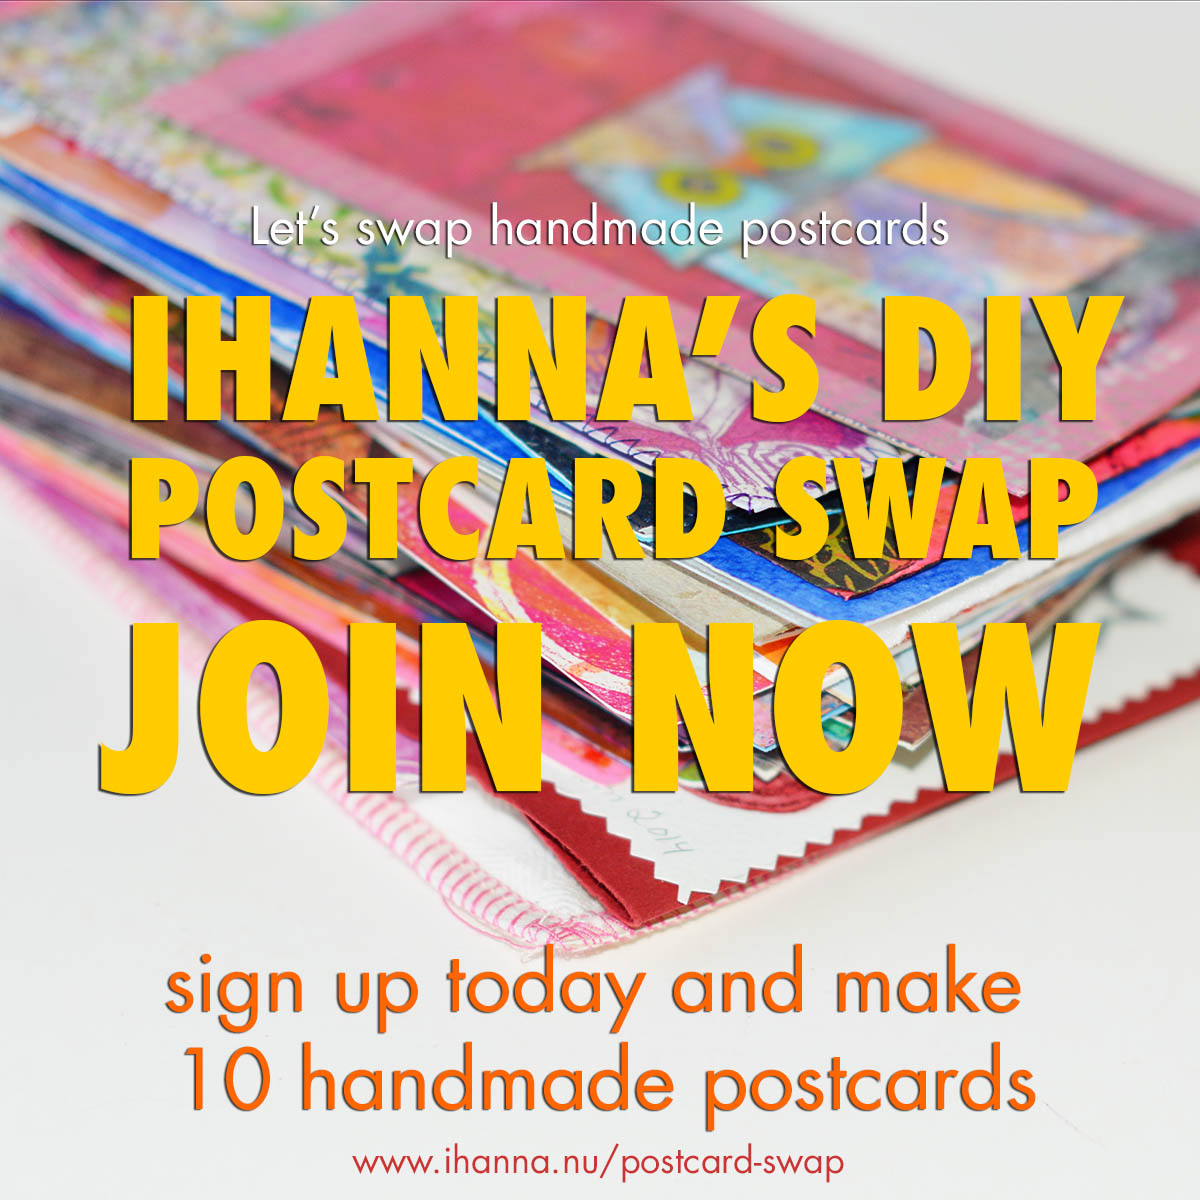 Join iHannas DIY Postcard Swap today sign up and make 10 handmade postcards #ihannaspostcardswap